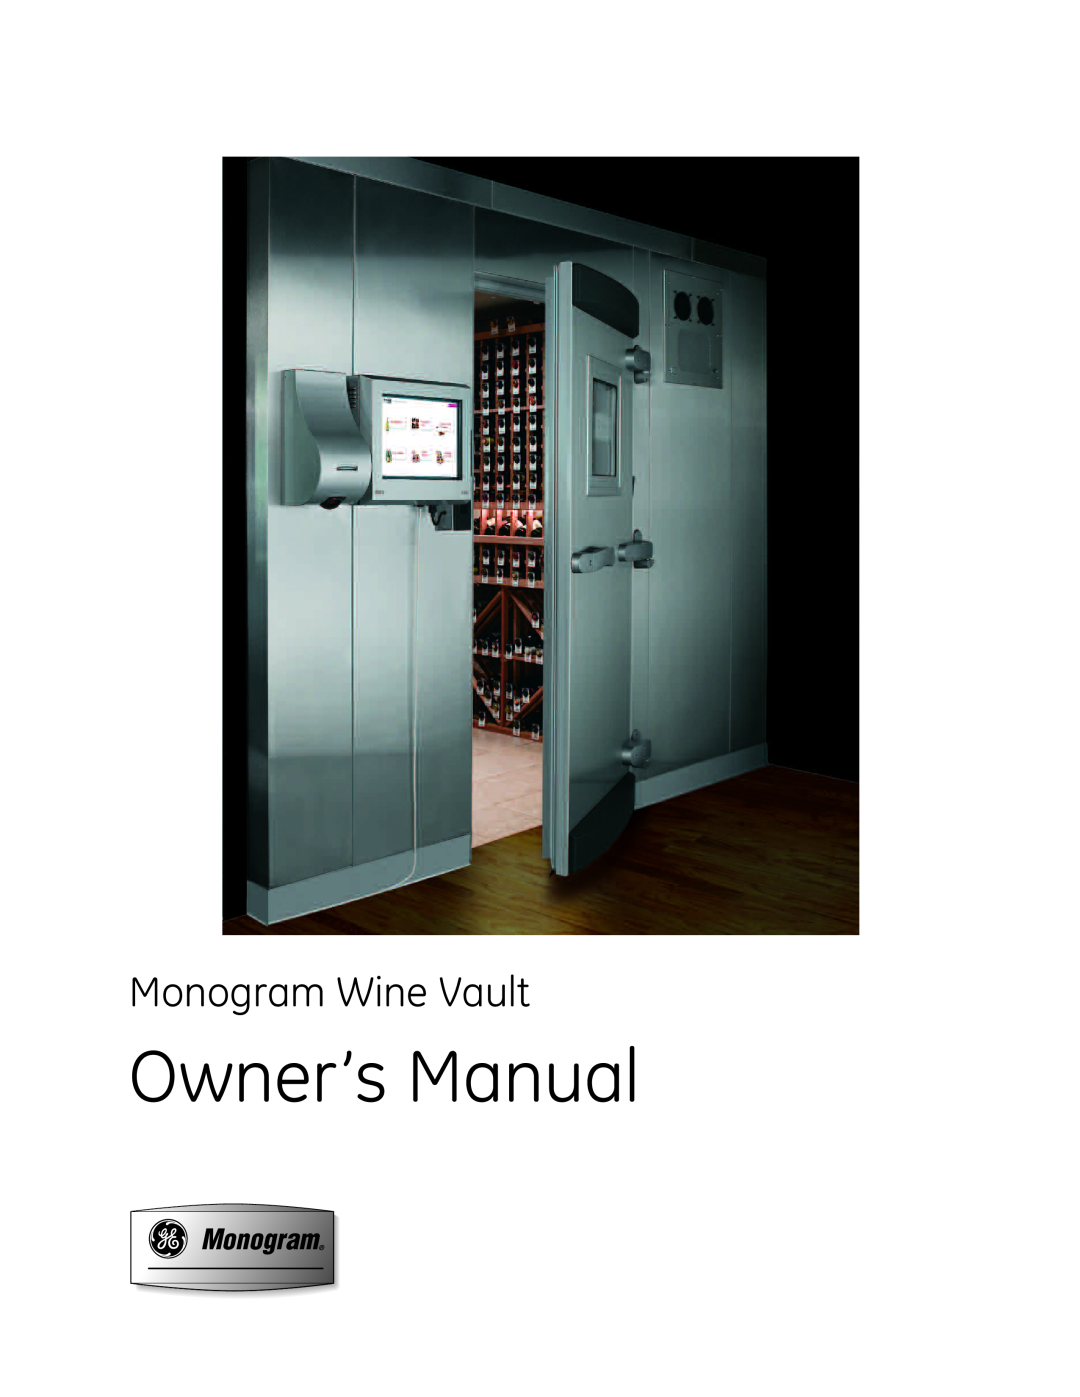 GE Monogram owner manual Monogram Wine Vault 